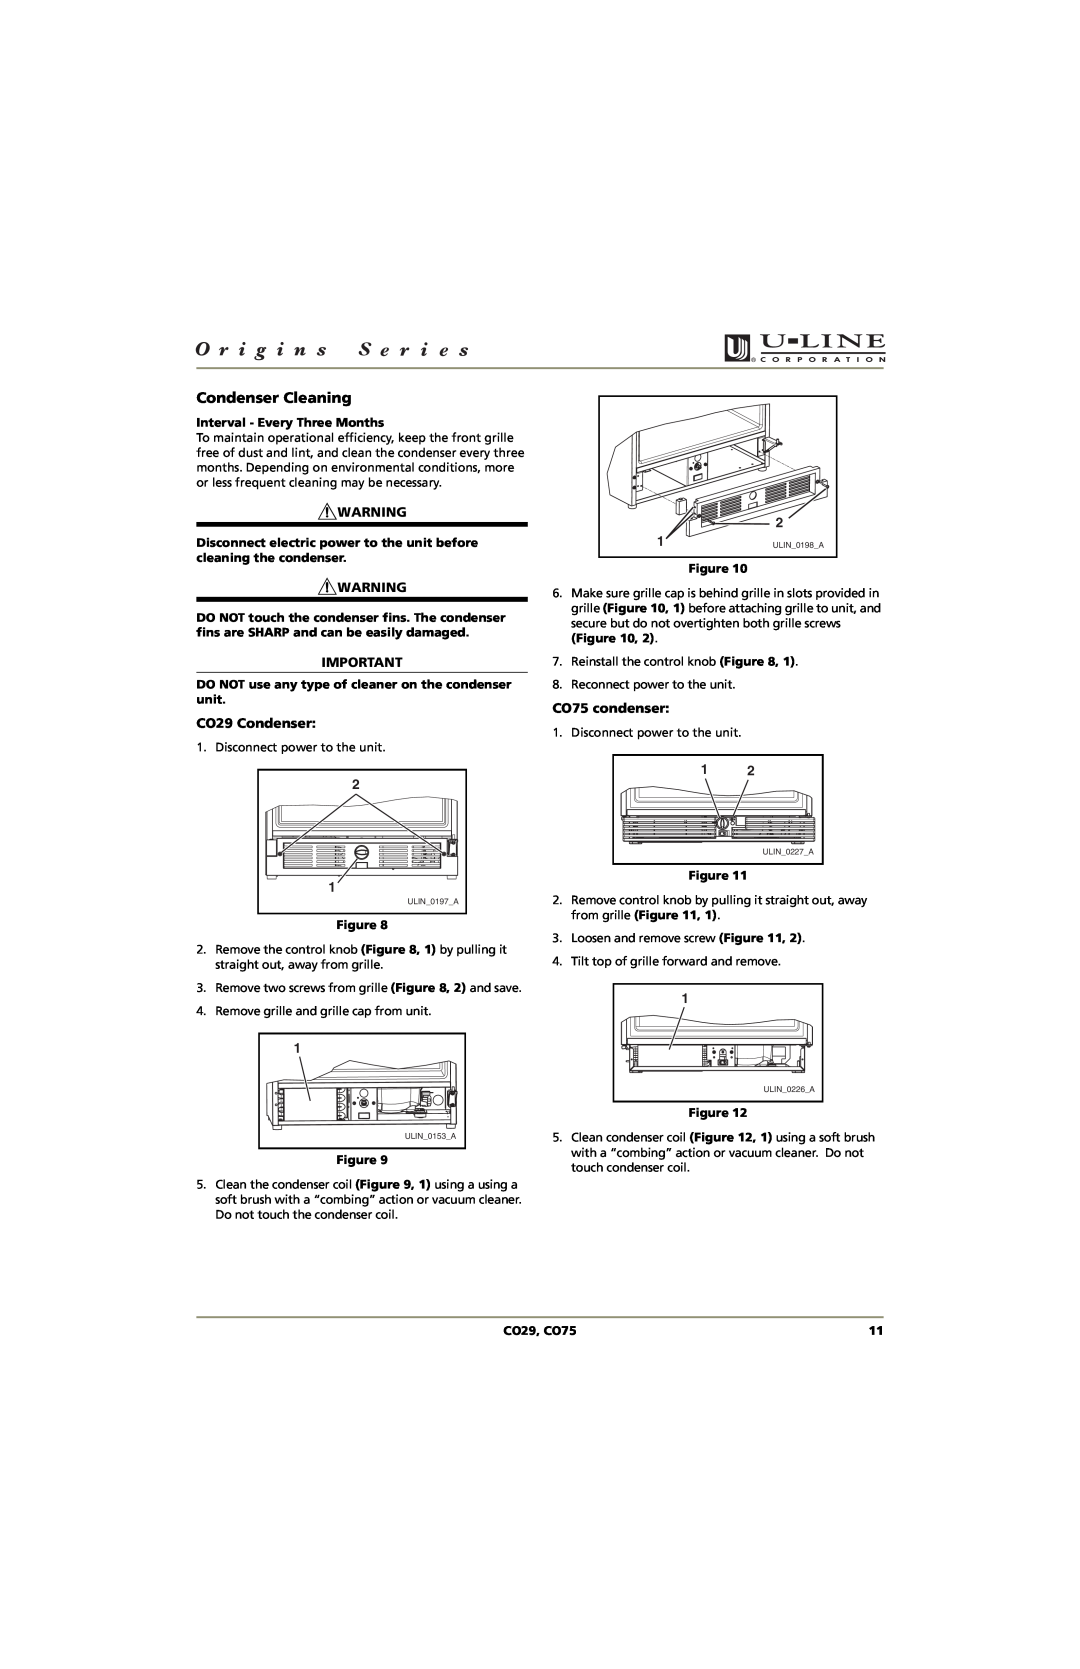 U-Line manual Condenser Cleaning, CO29 Condenser, CO75 condenser 